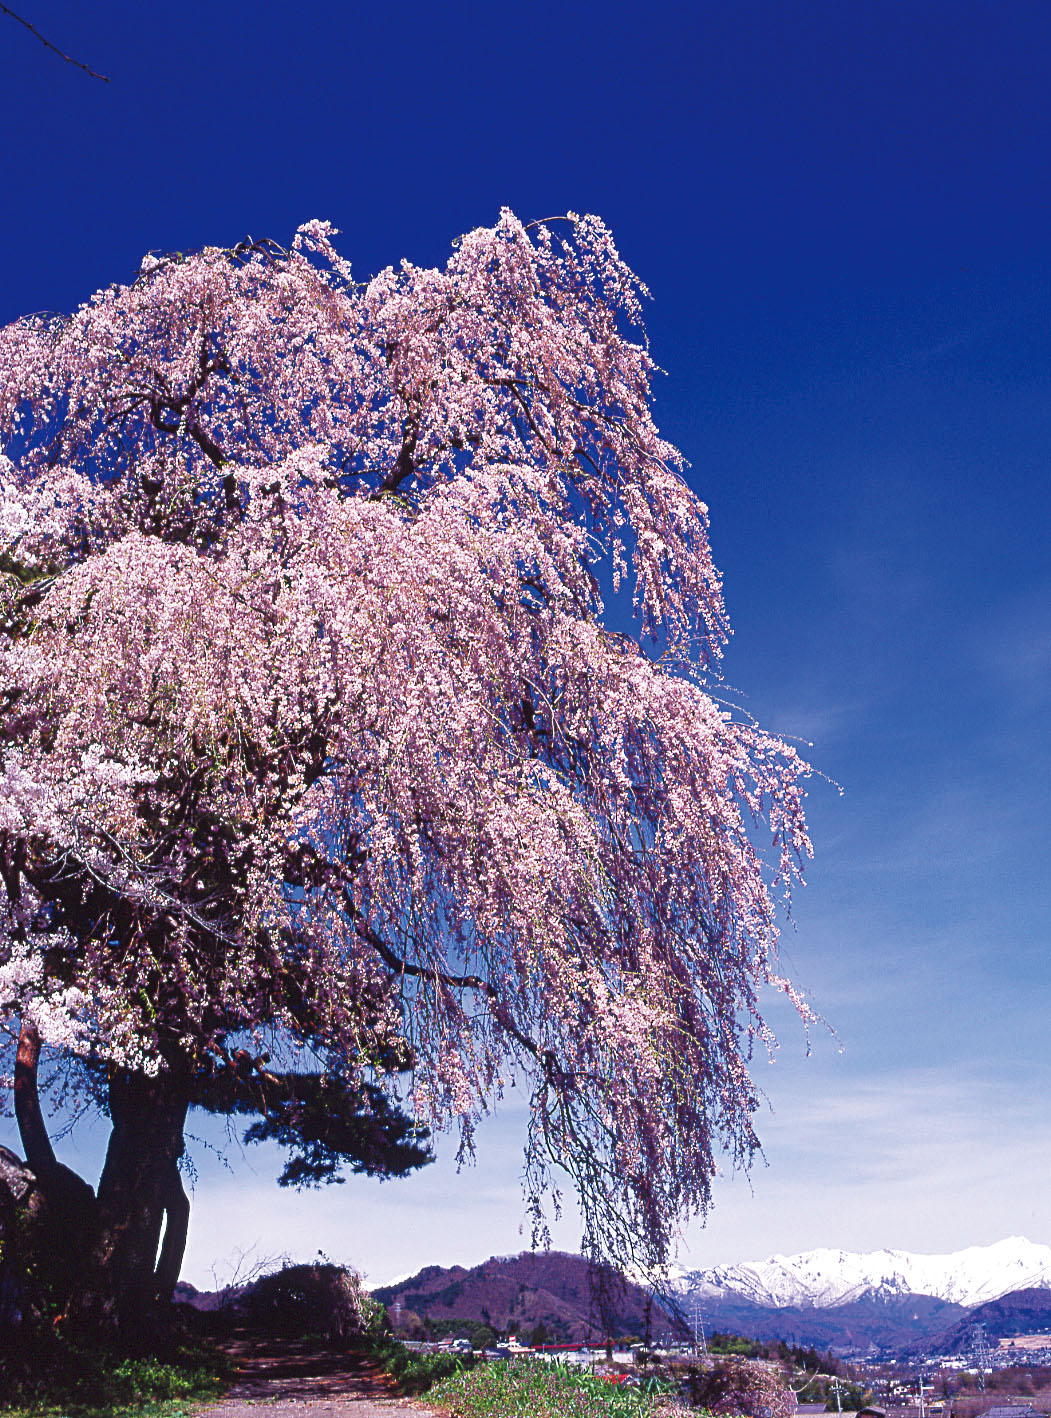 The beautiful Shimodarezakura at Shimokawada where you can overlook to the snowy mountains behind the cherry blossom